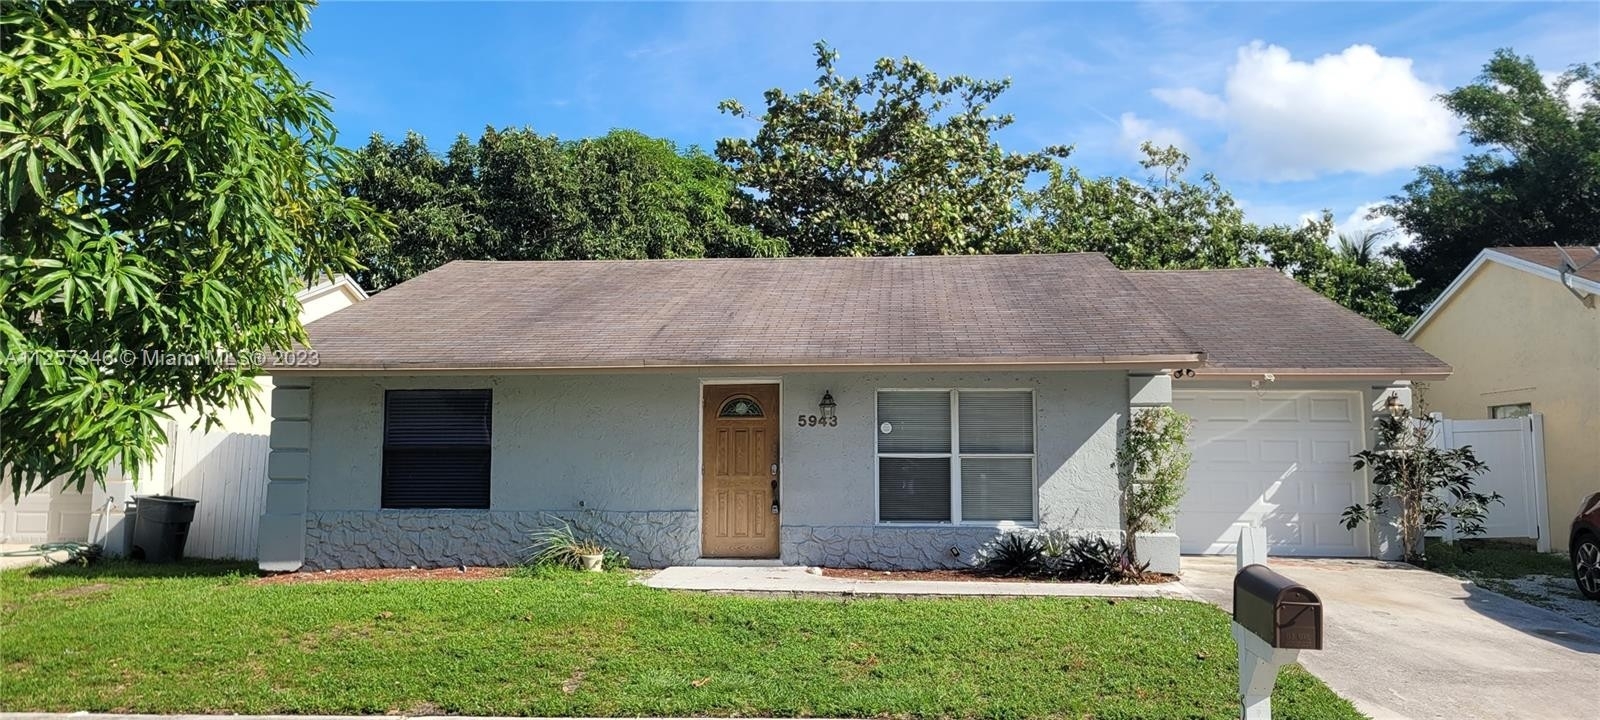 Single Family Home for Sale at Lantana, Lake Worth, FL 33463